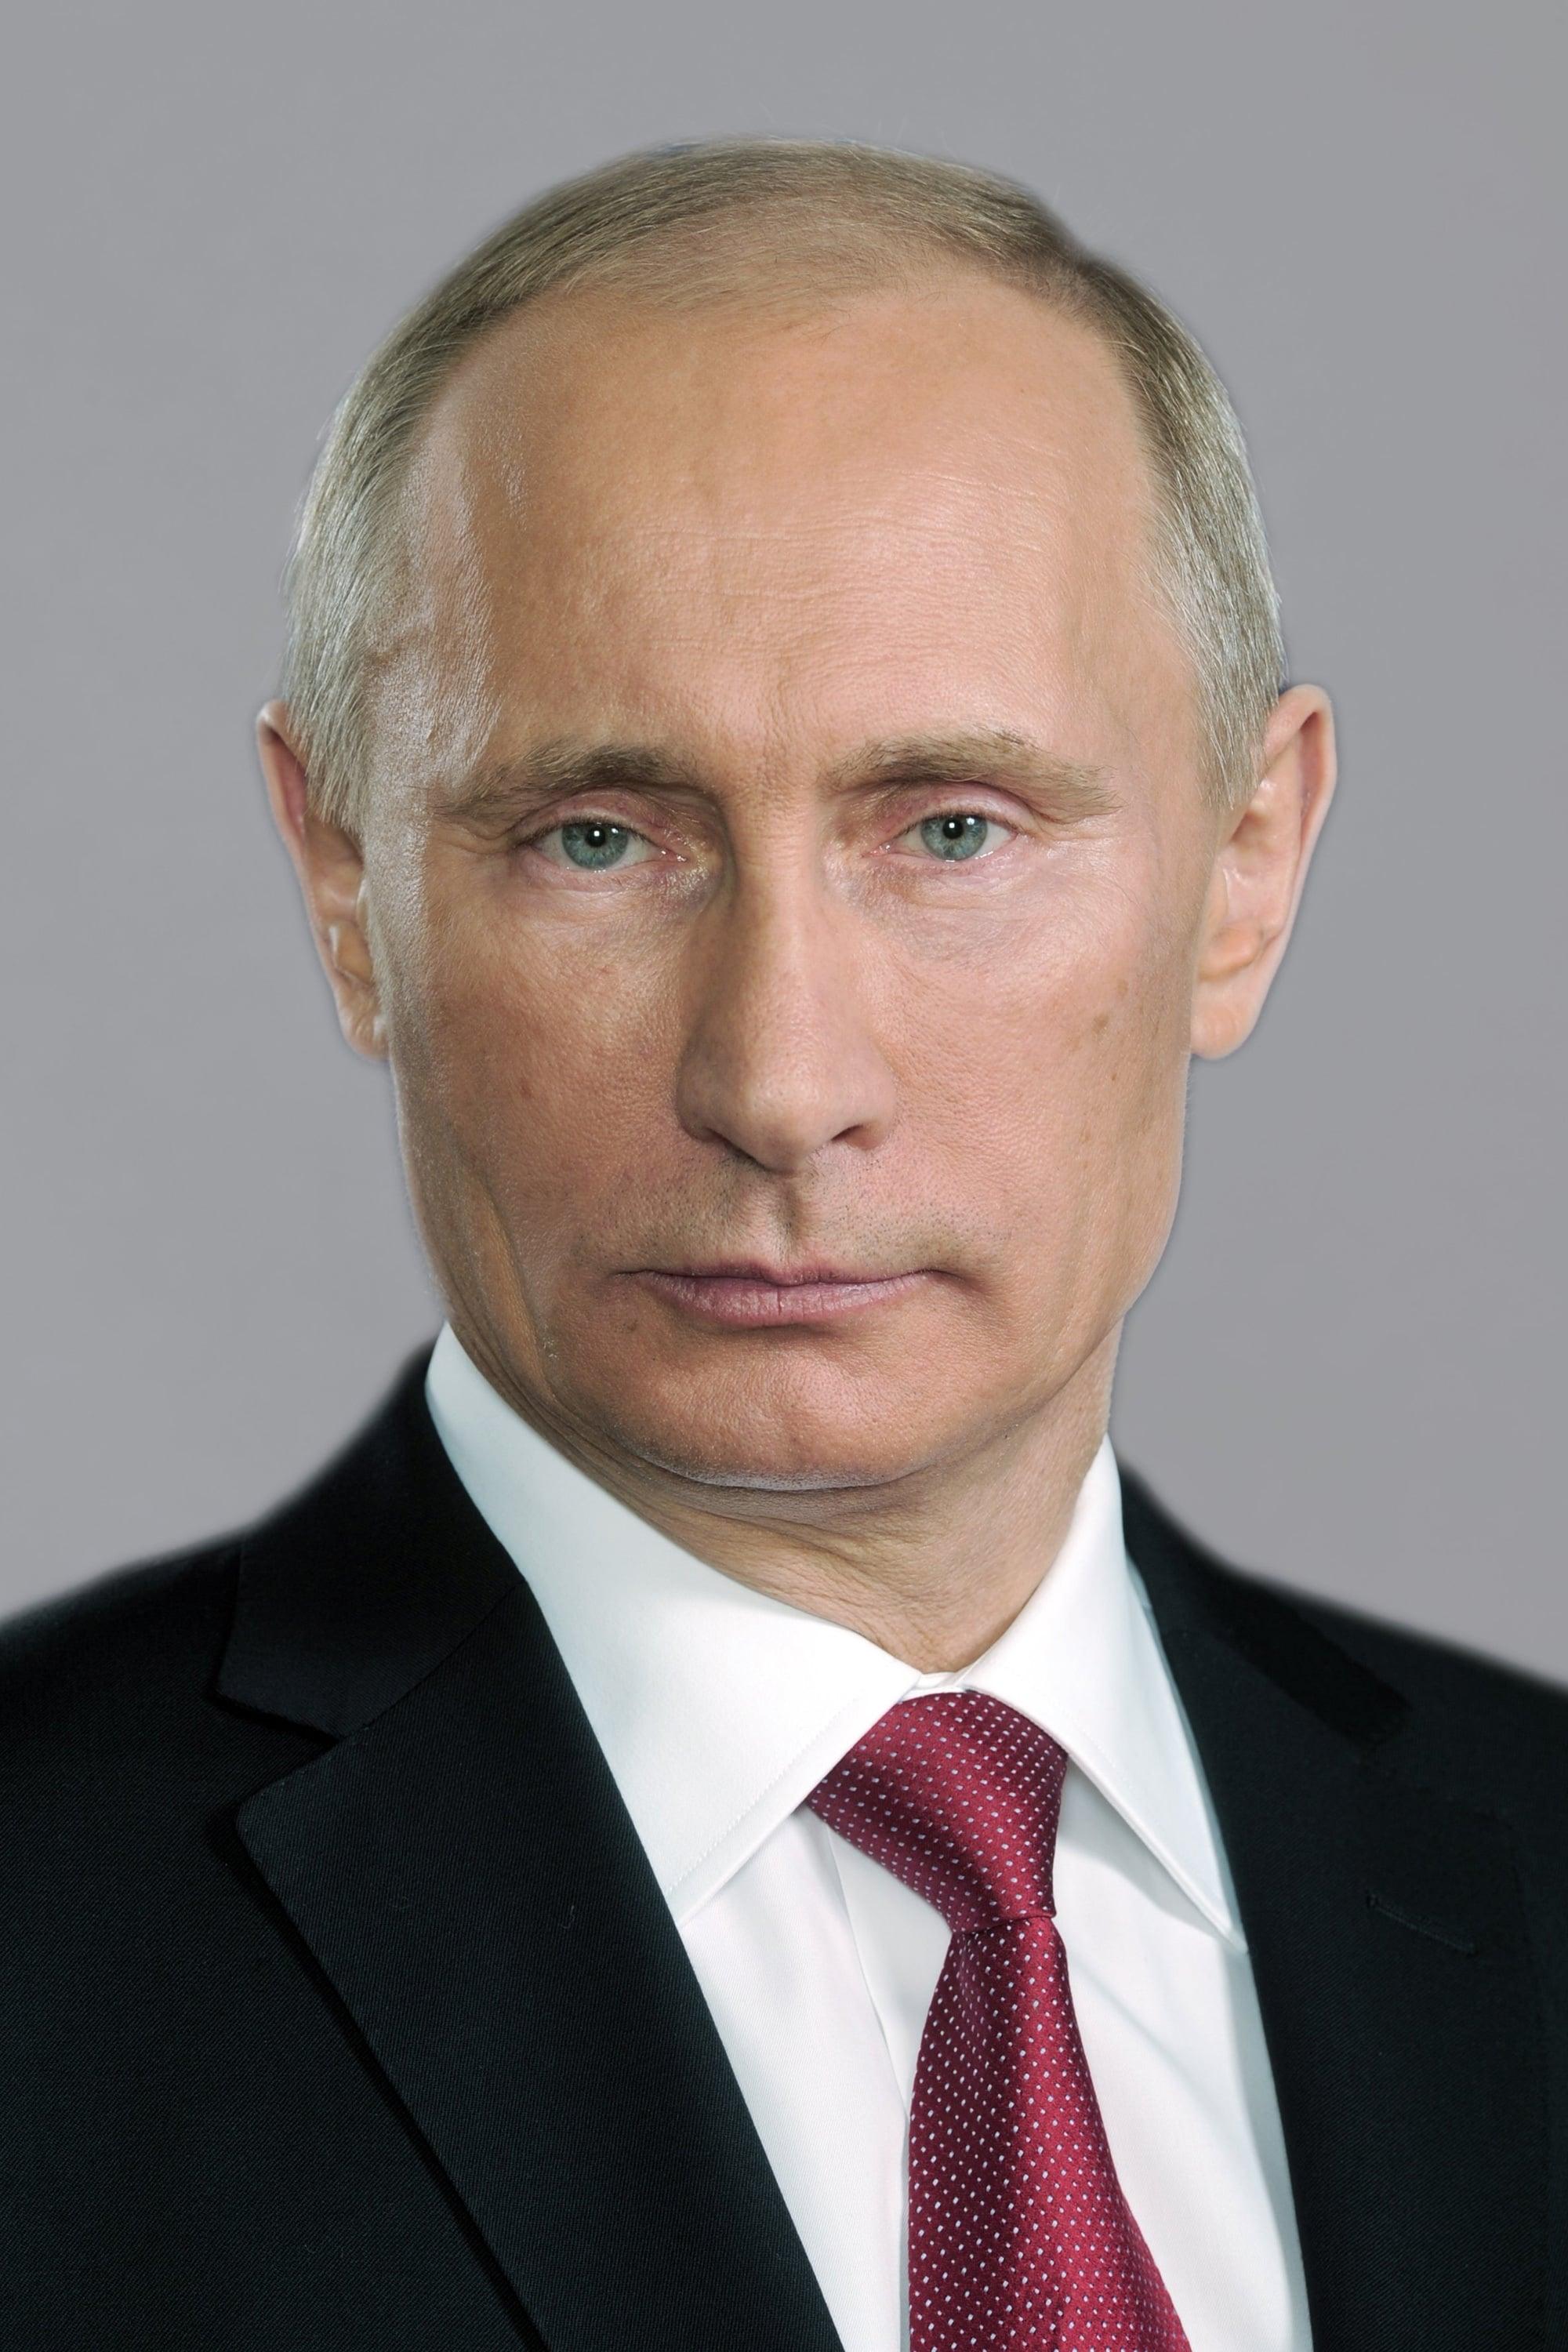 Vladimir Putin | Self